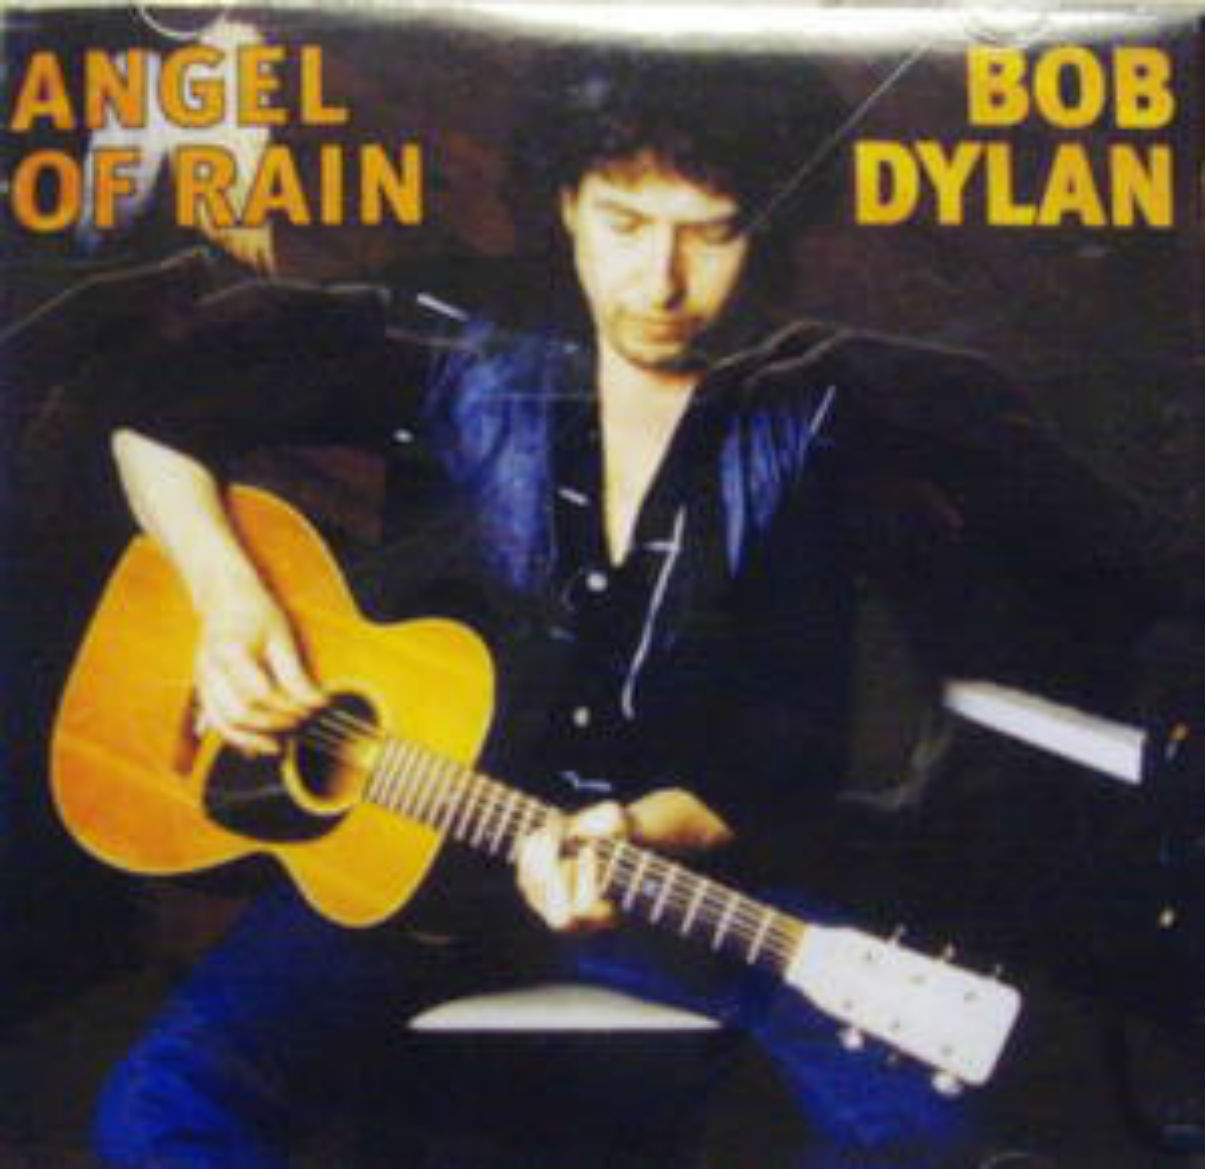 Bob Dylan / Angel of Rain